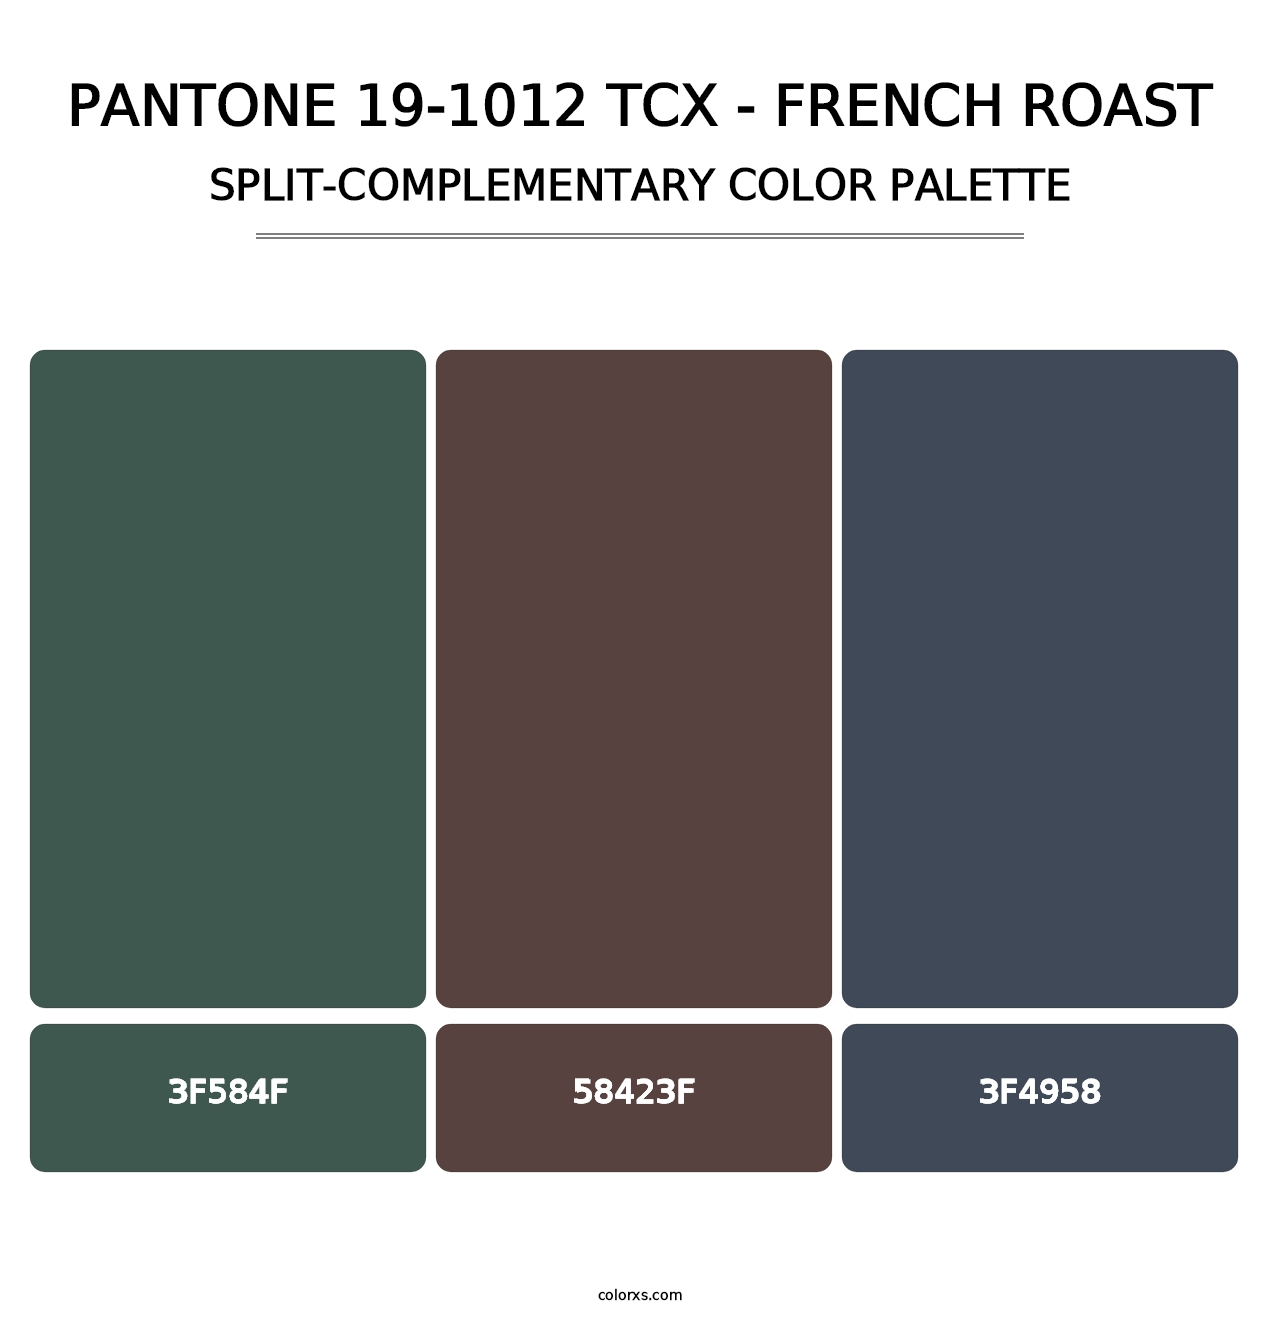 PANTONE 19-1012 TCX - French Roast - Split-Complementary Color Palette